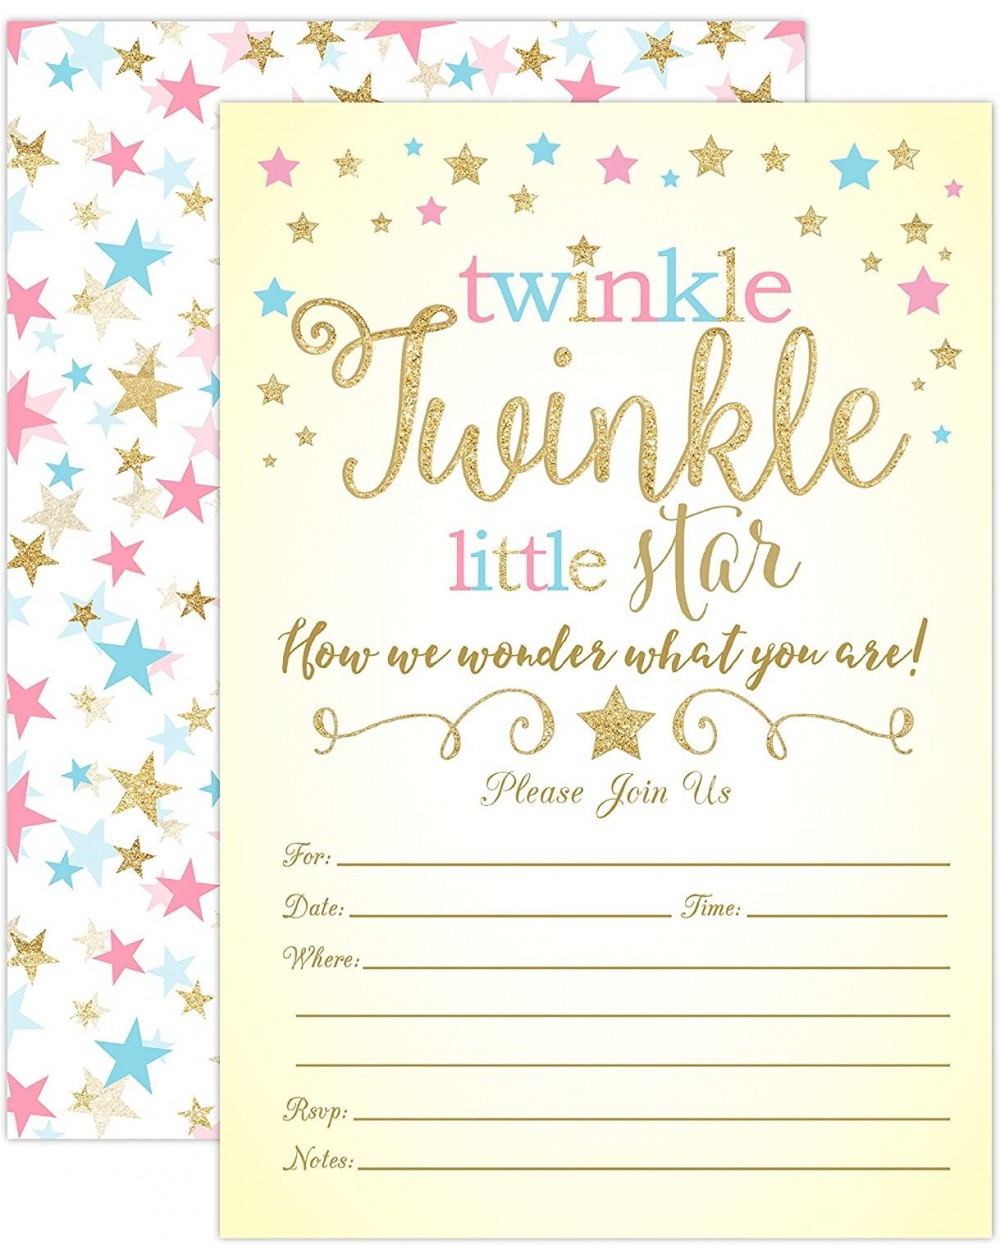 Invitations Twinkle Twinkle Little Star Gender Reveal Invitations- Gender Reveal Party Baby Shower Invites- 20 Fill in Style ...